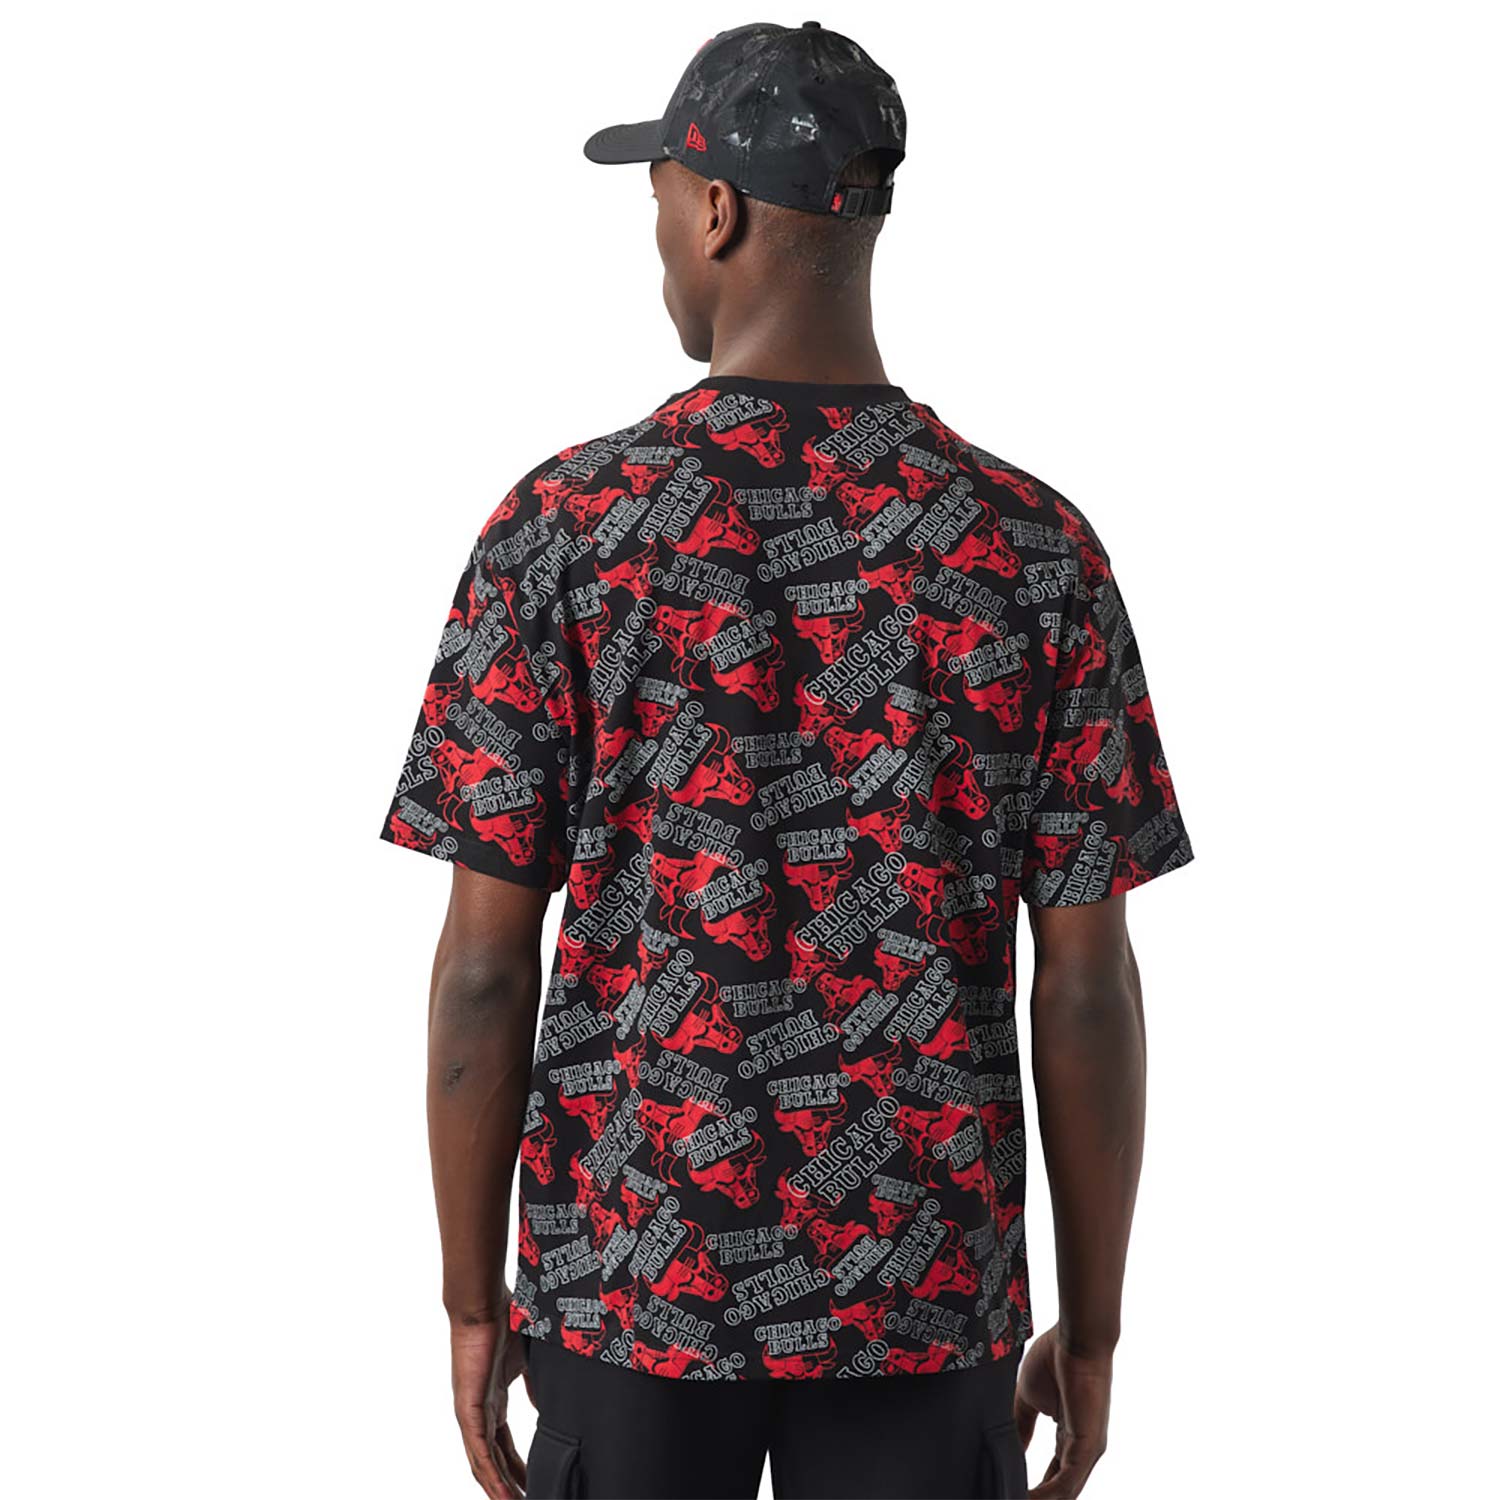 T-Shirt oversize Chicago Bulls Logo Stampa Nera